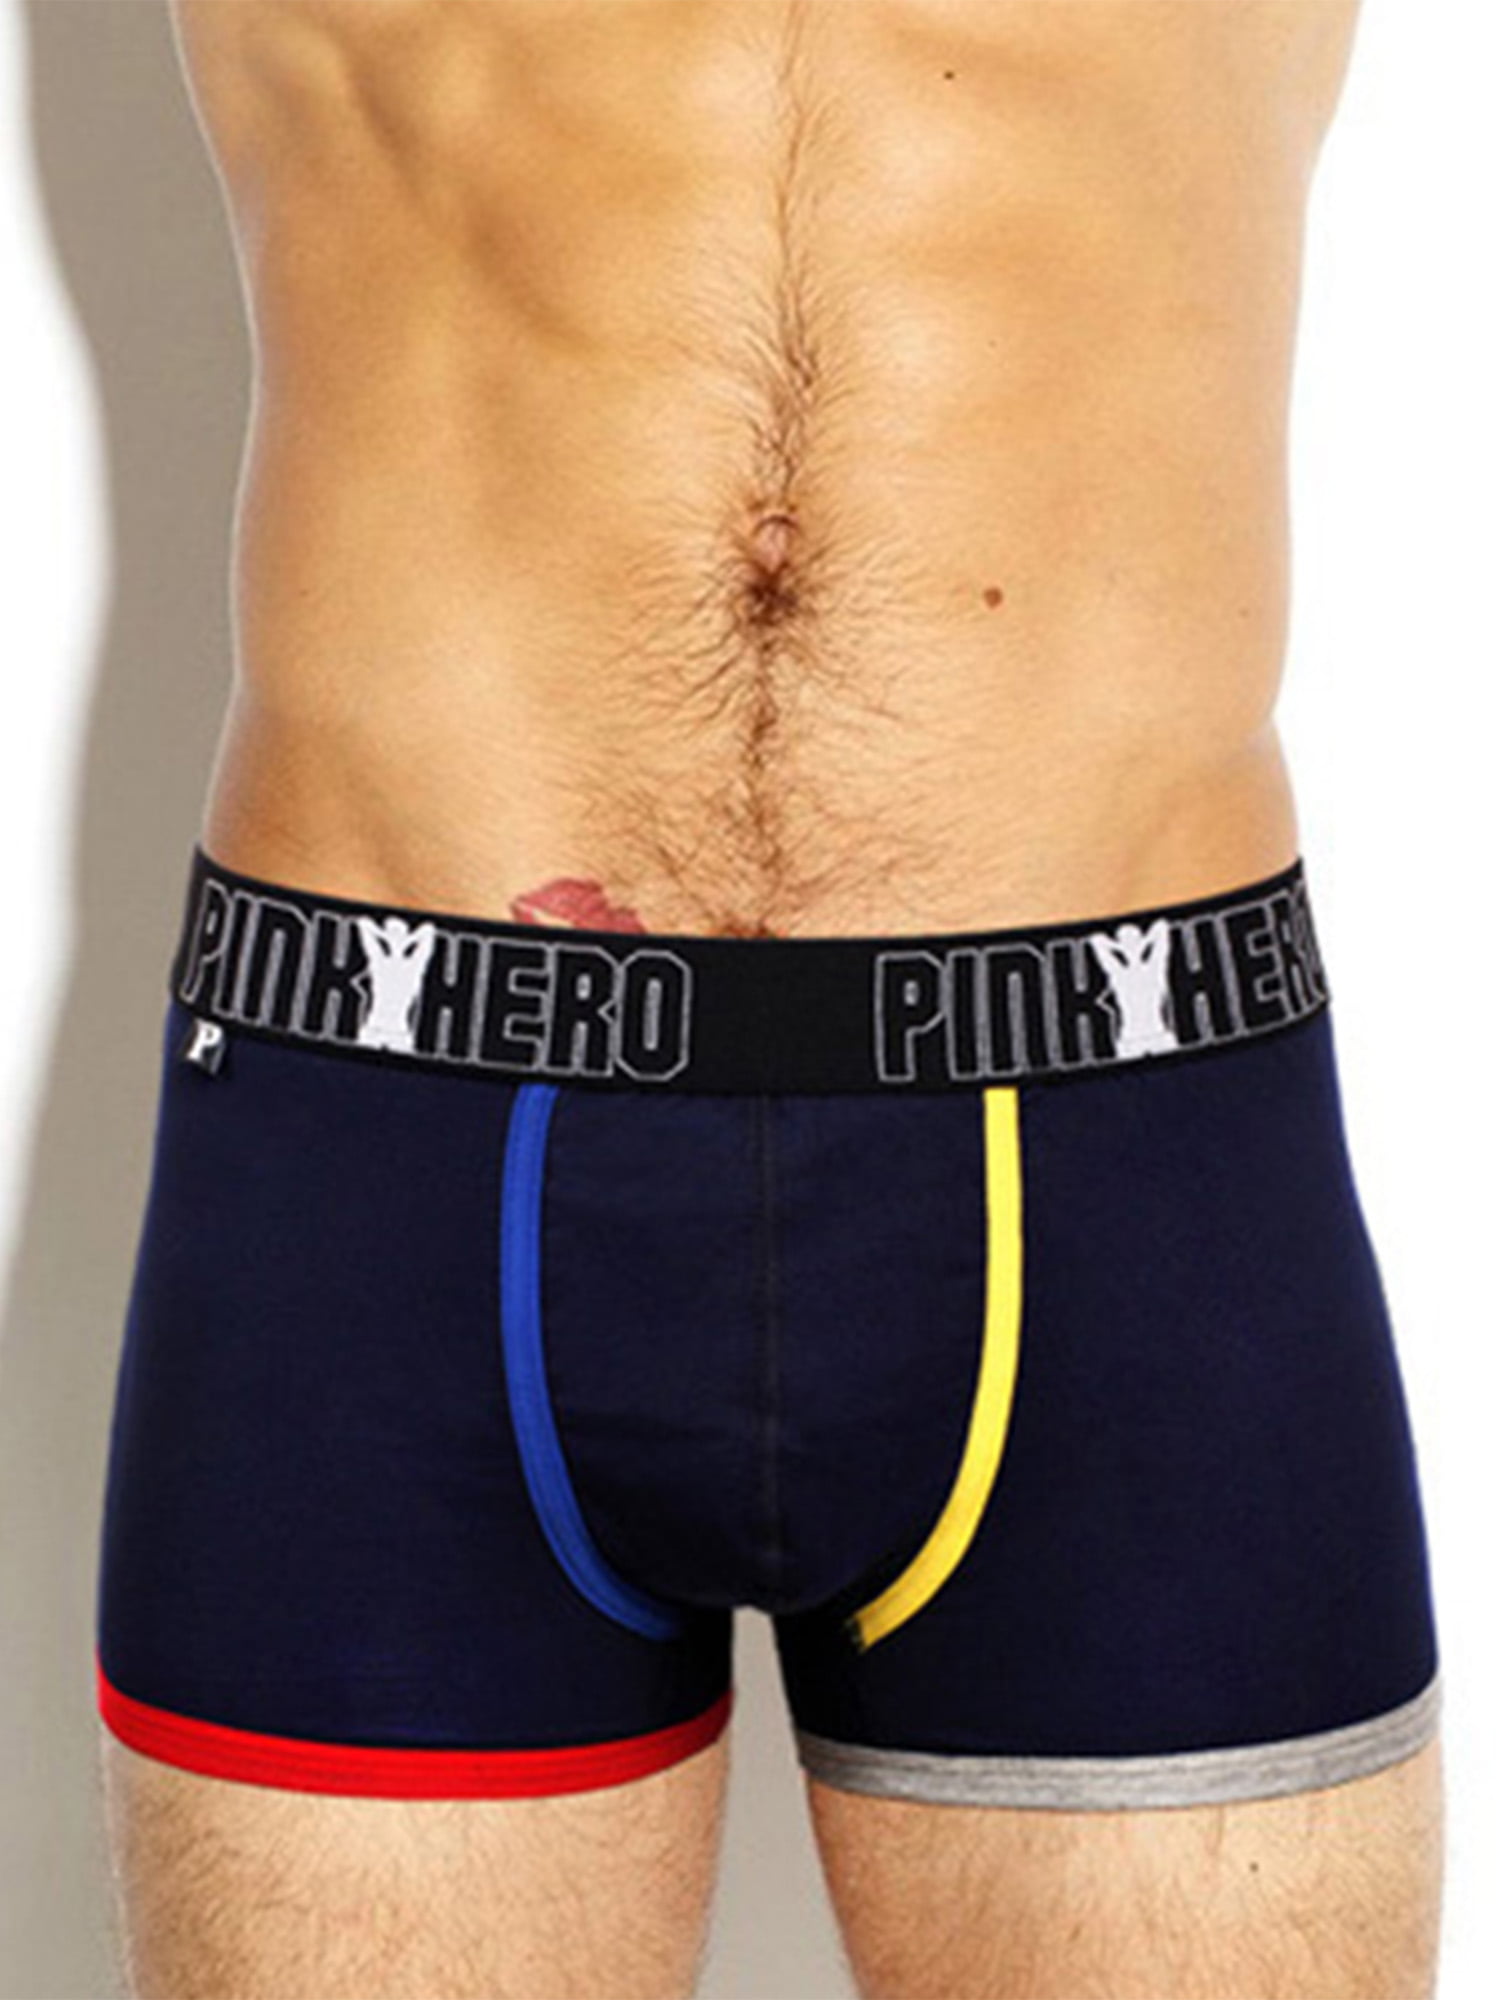 Men Cheeky Boxer Briefs Elastic Skimpy Underwar Bulge Pouch Hipster Bikini Trunk